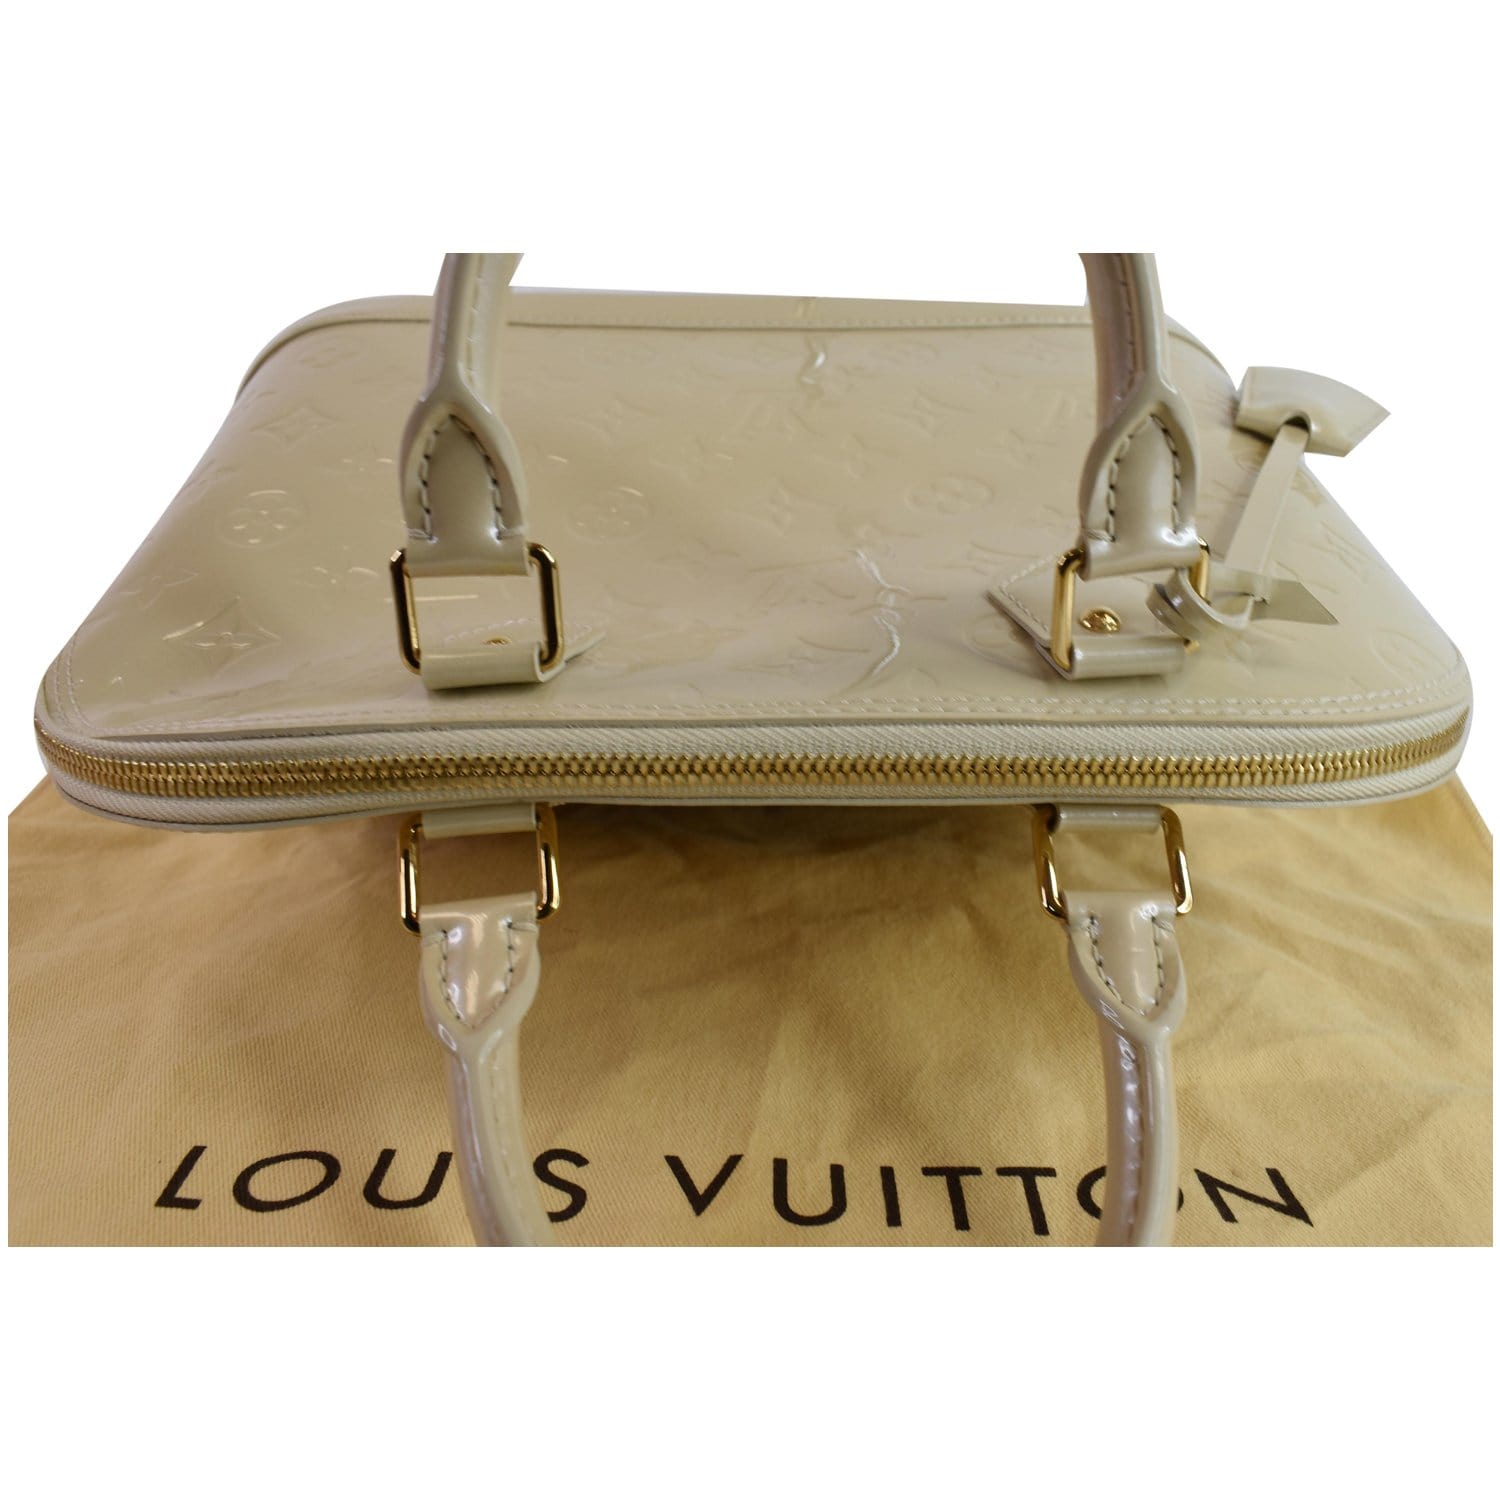 Brown Louis Vuitton Monogram Vernis Alma PM Handbag – Designer Revival